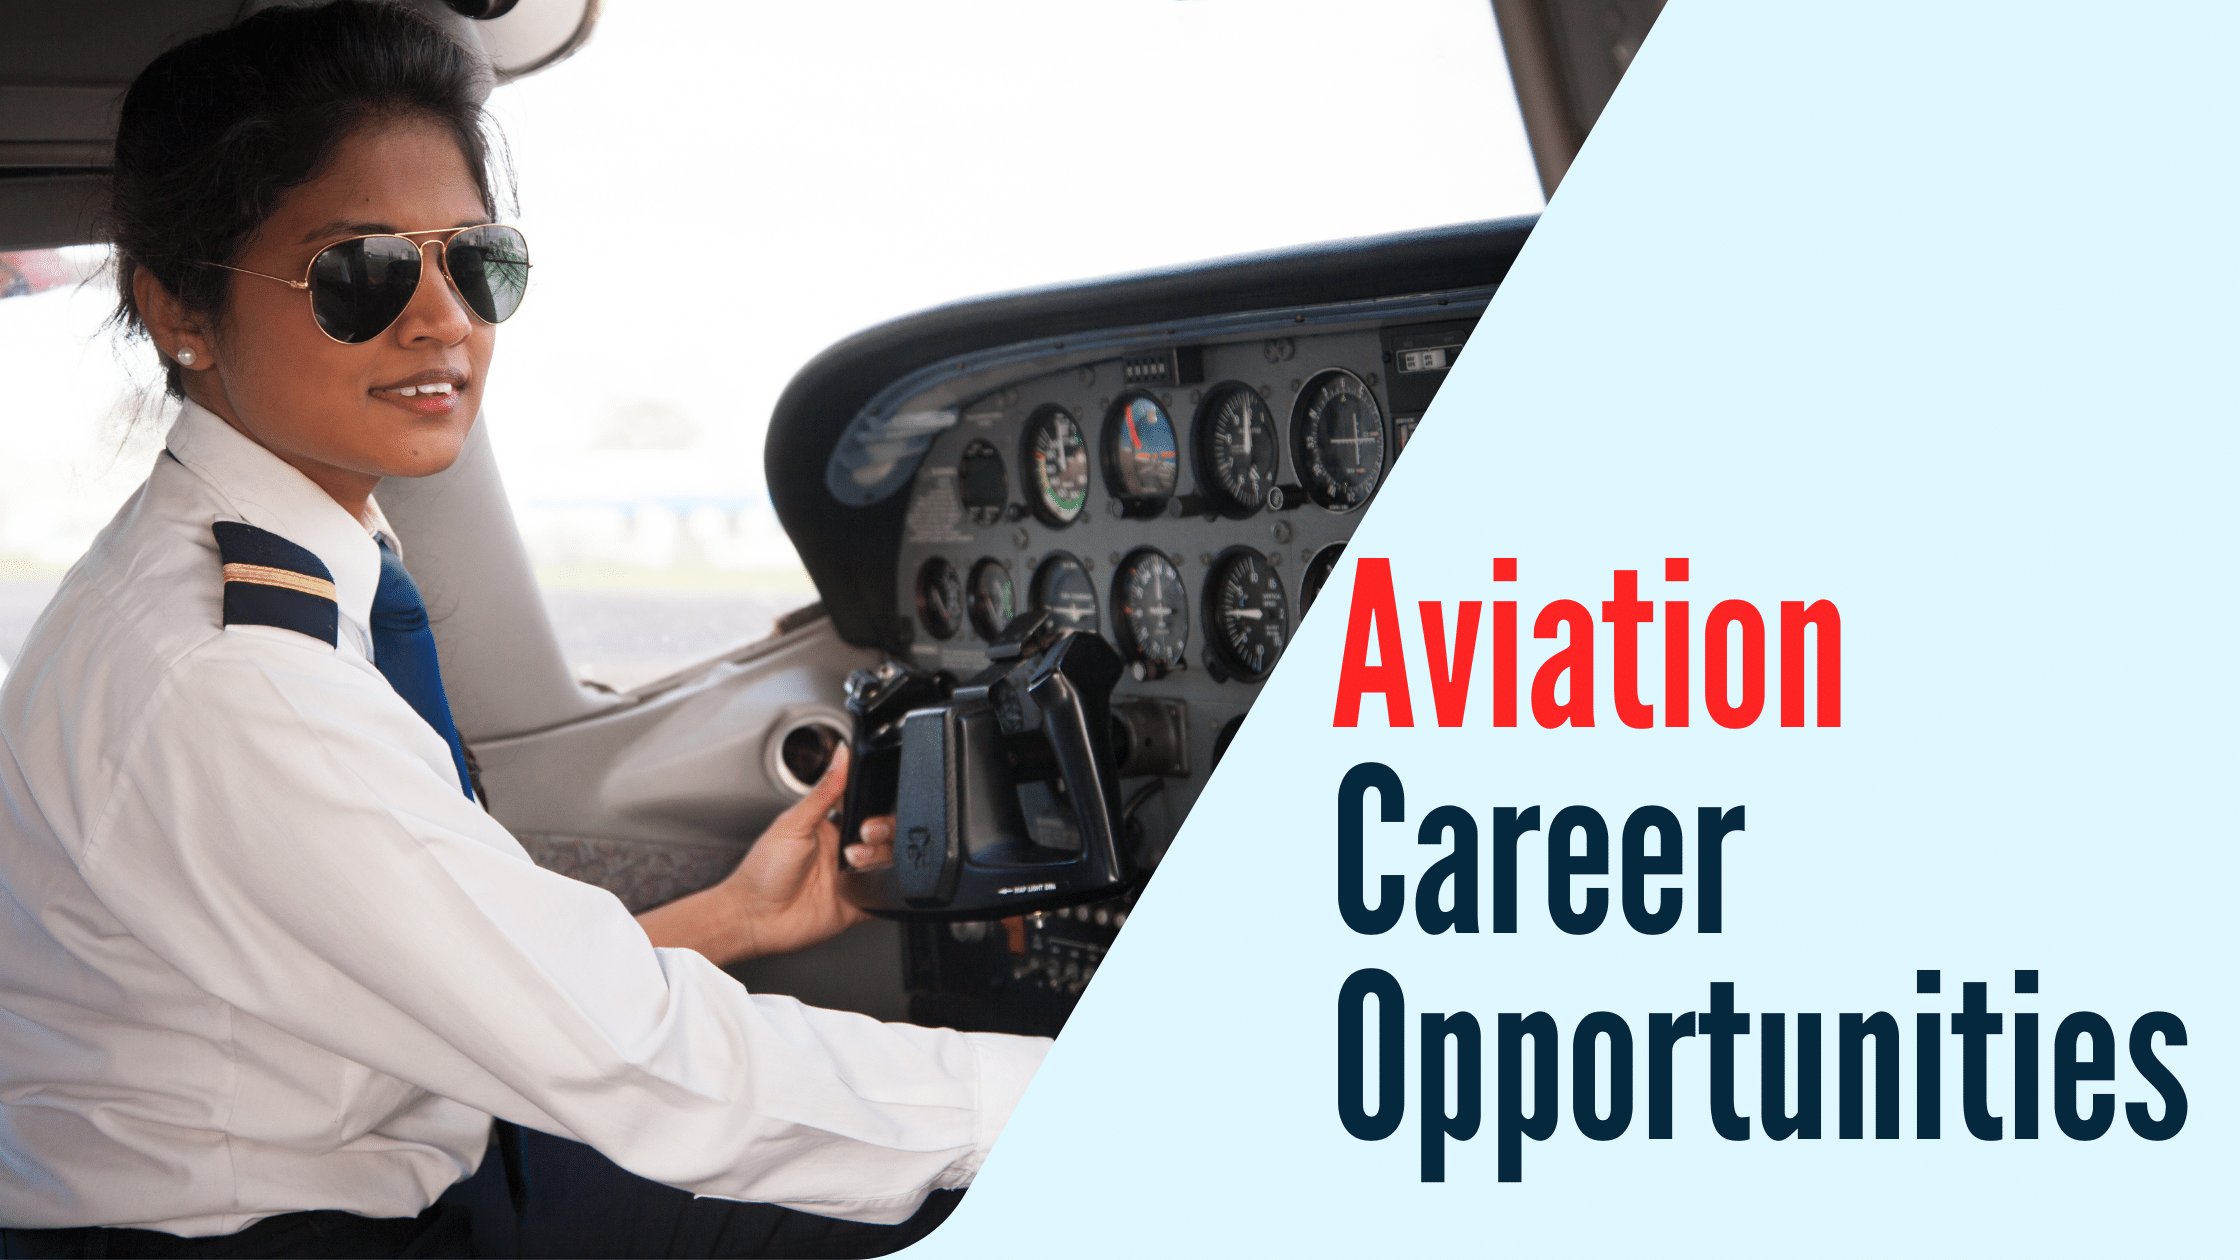 Aviation Career Opportunities BB6R5 